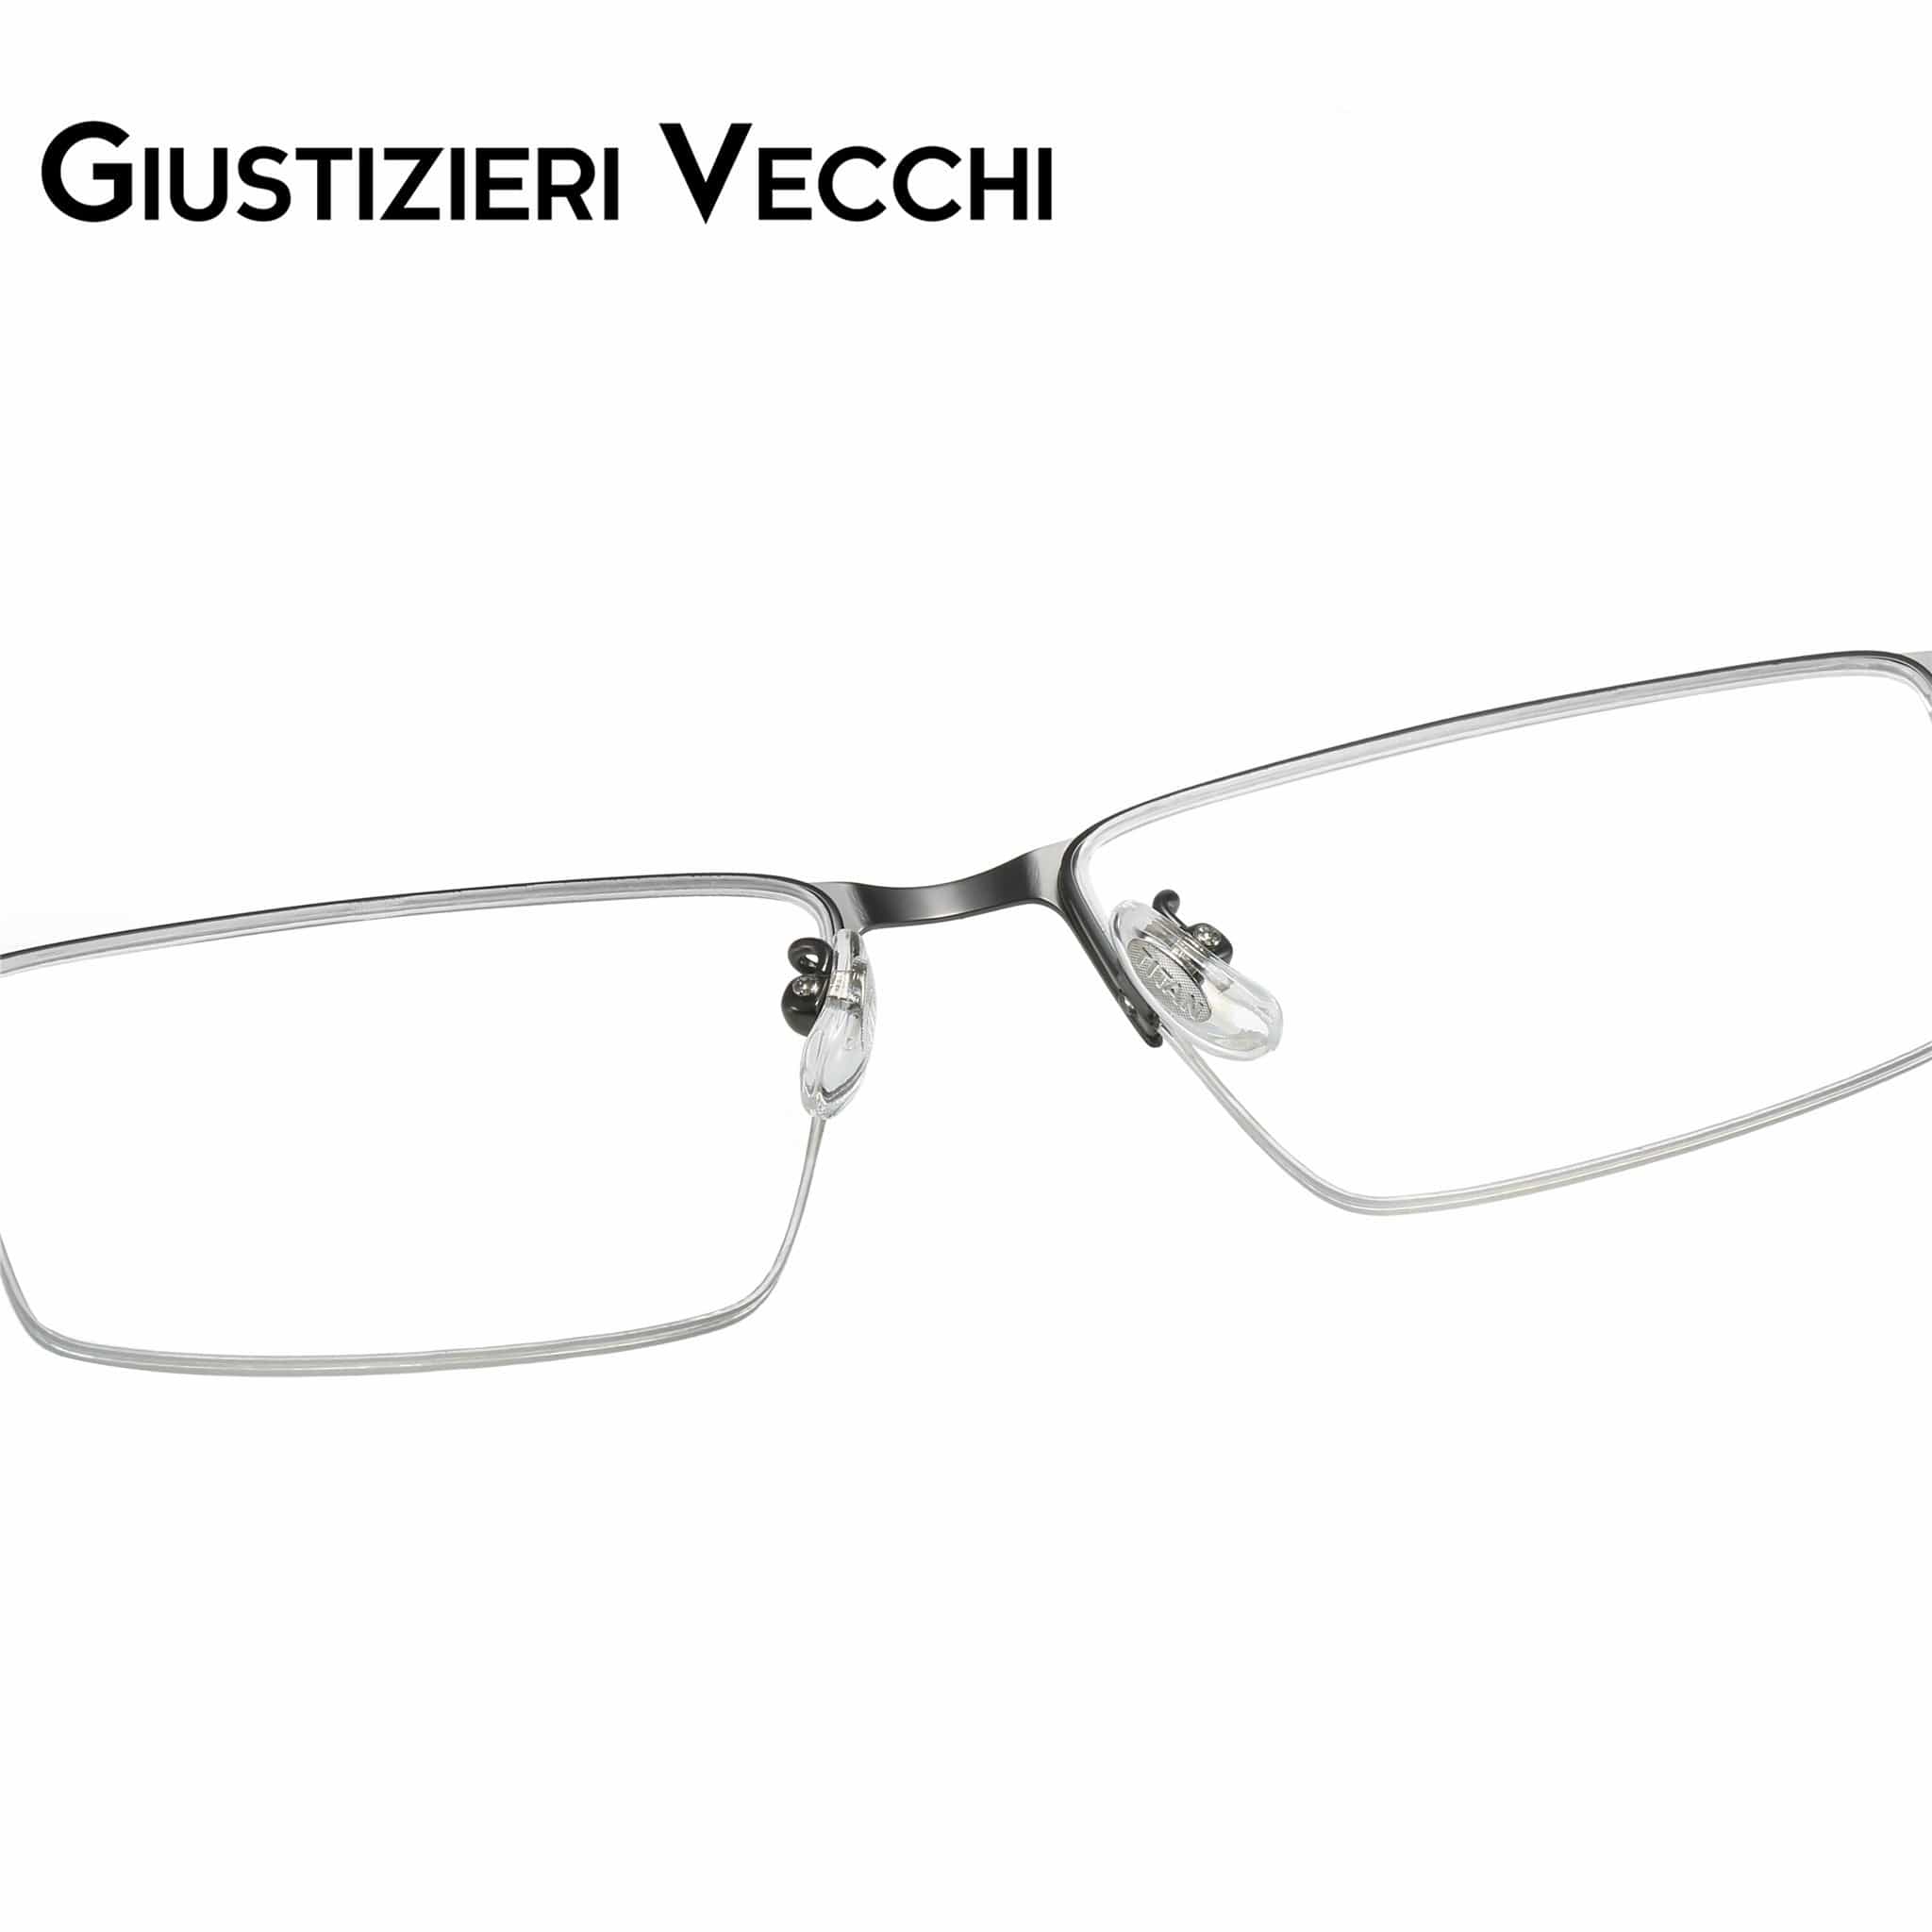 GIUSTIZIERI VECCHI Eyeglasses FireFlow Uno